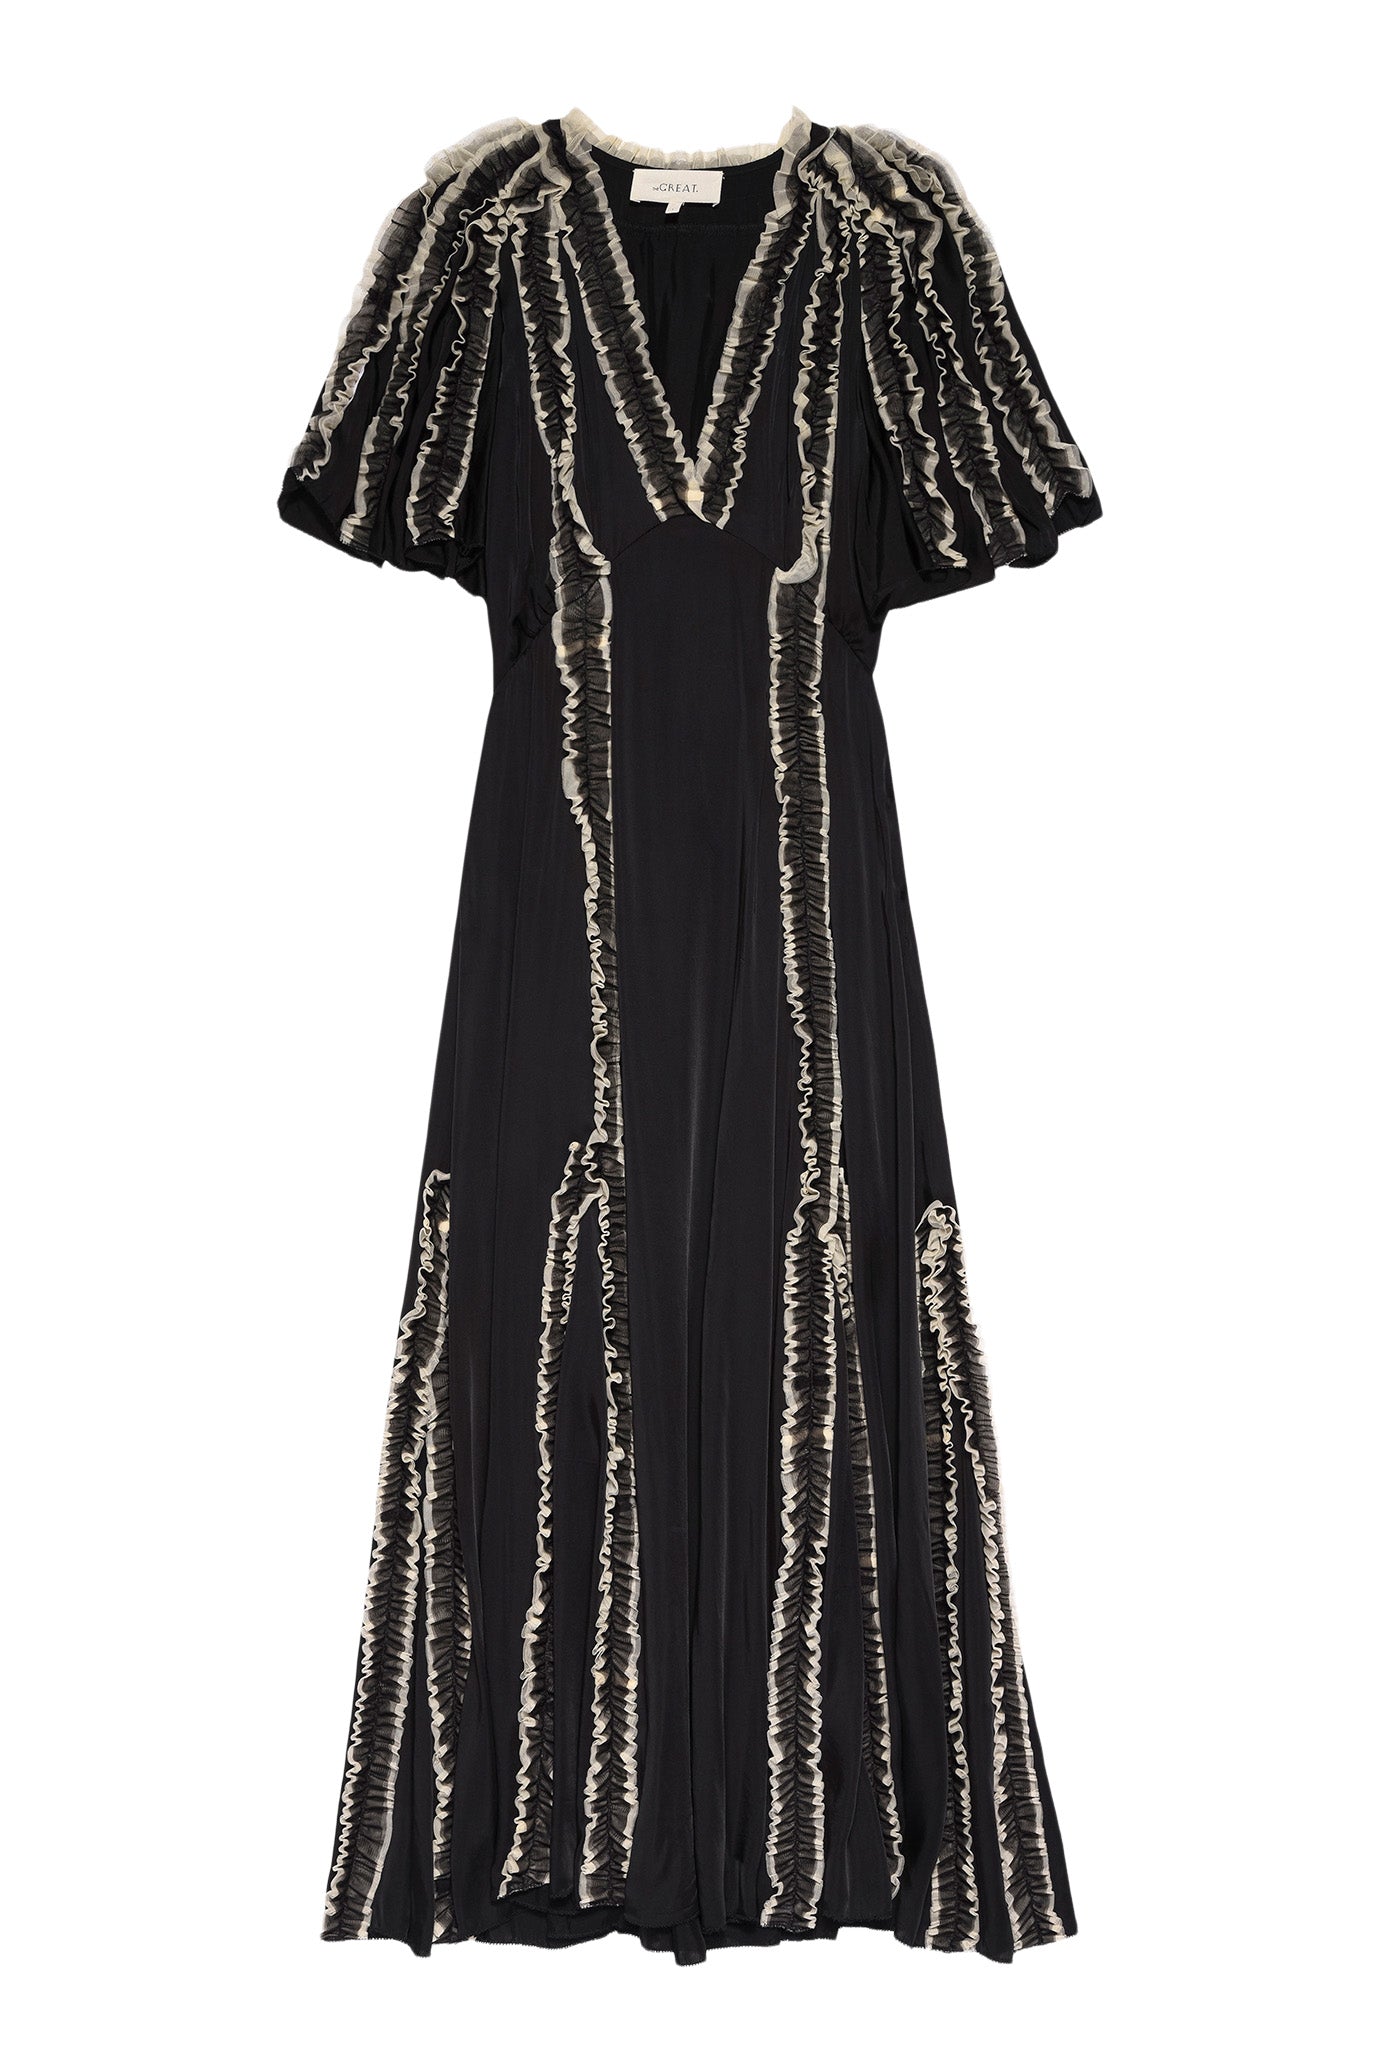 The Great Dancehall Dress in Black Cream